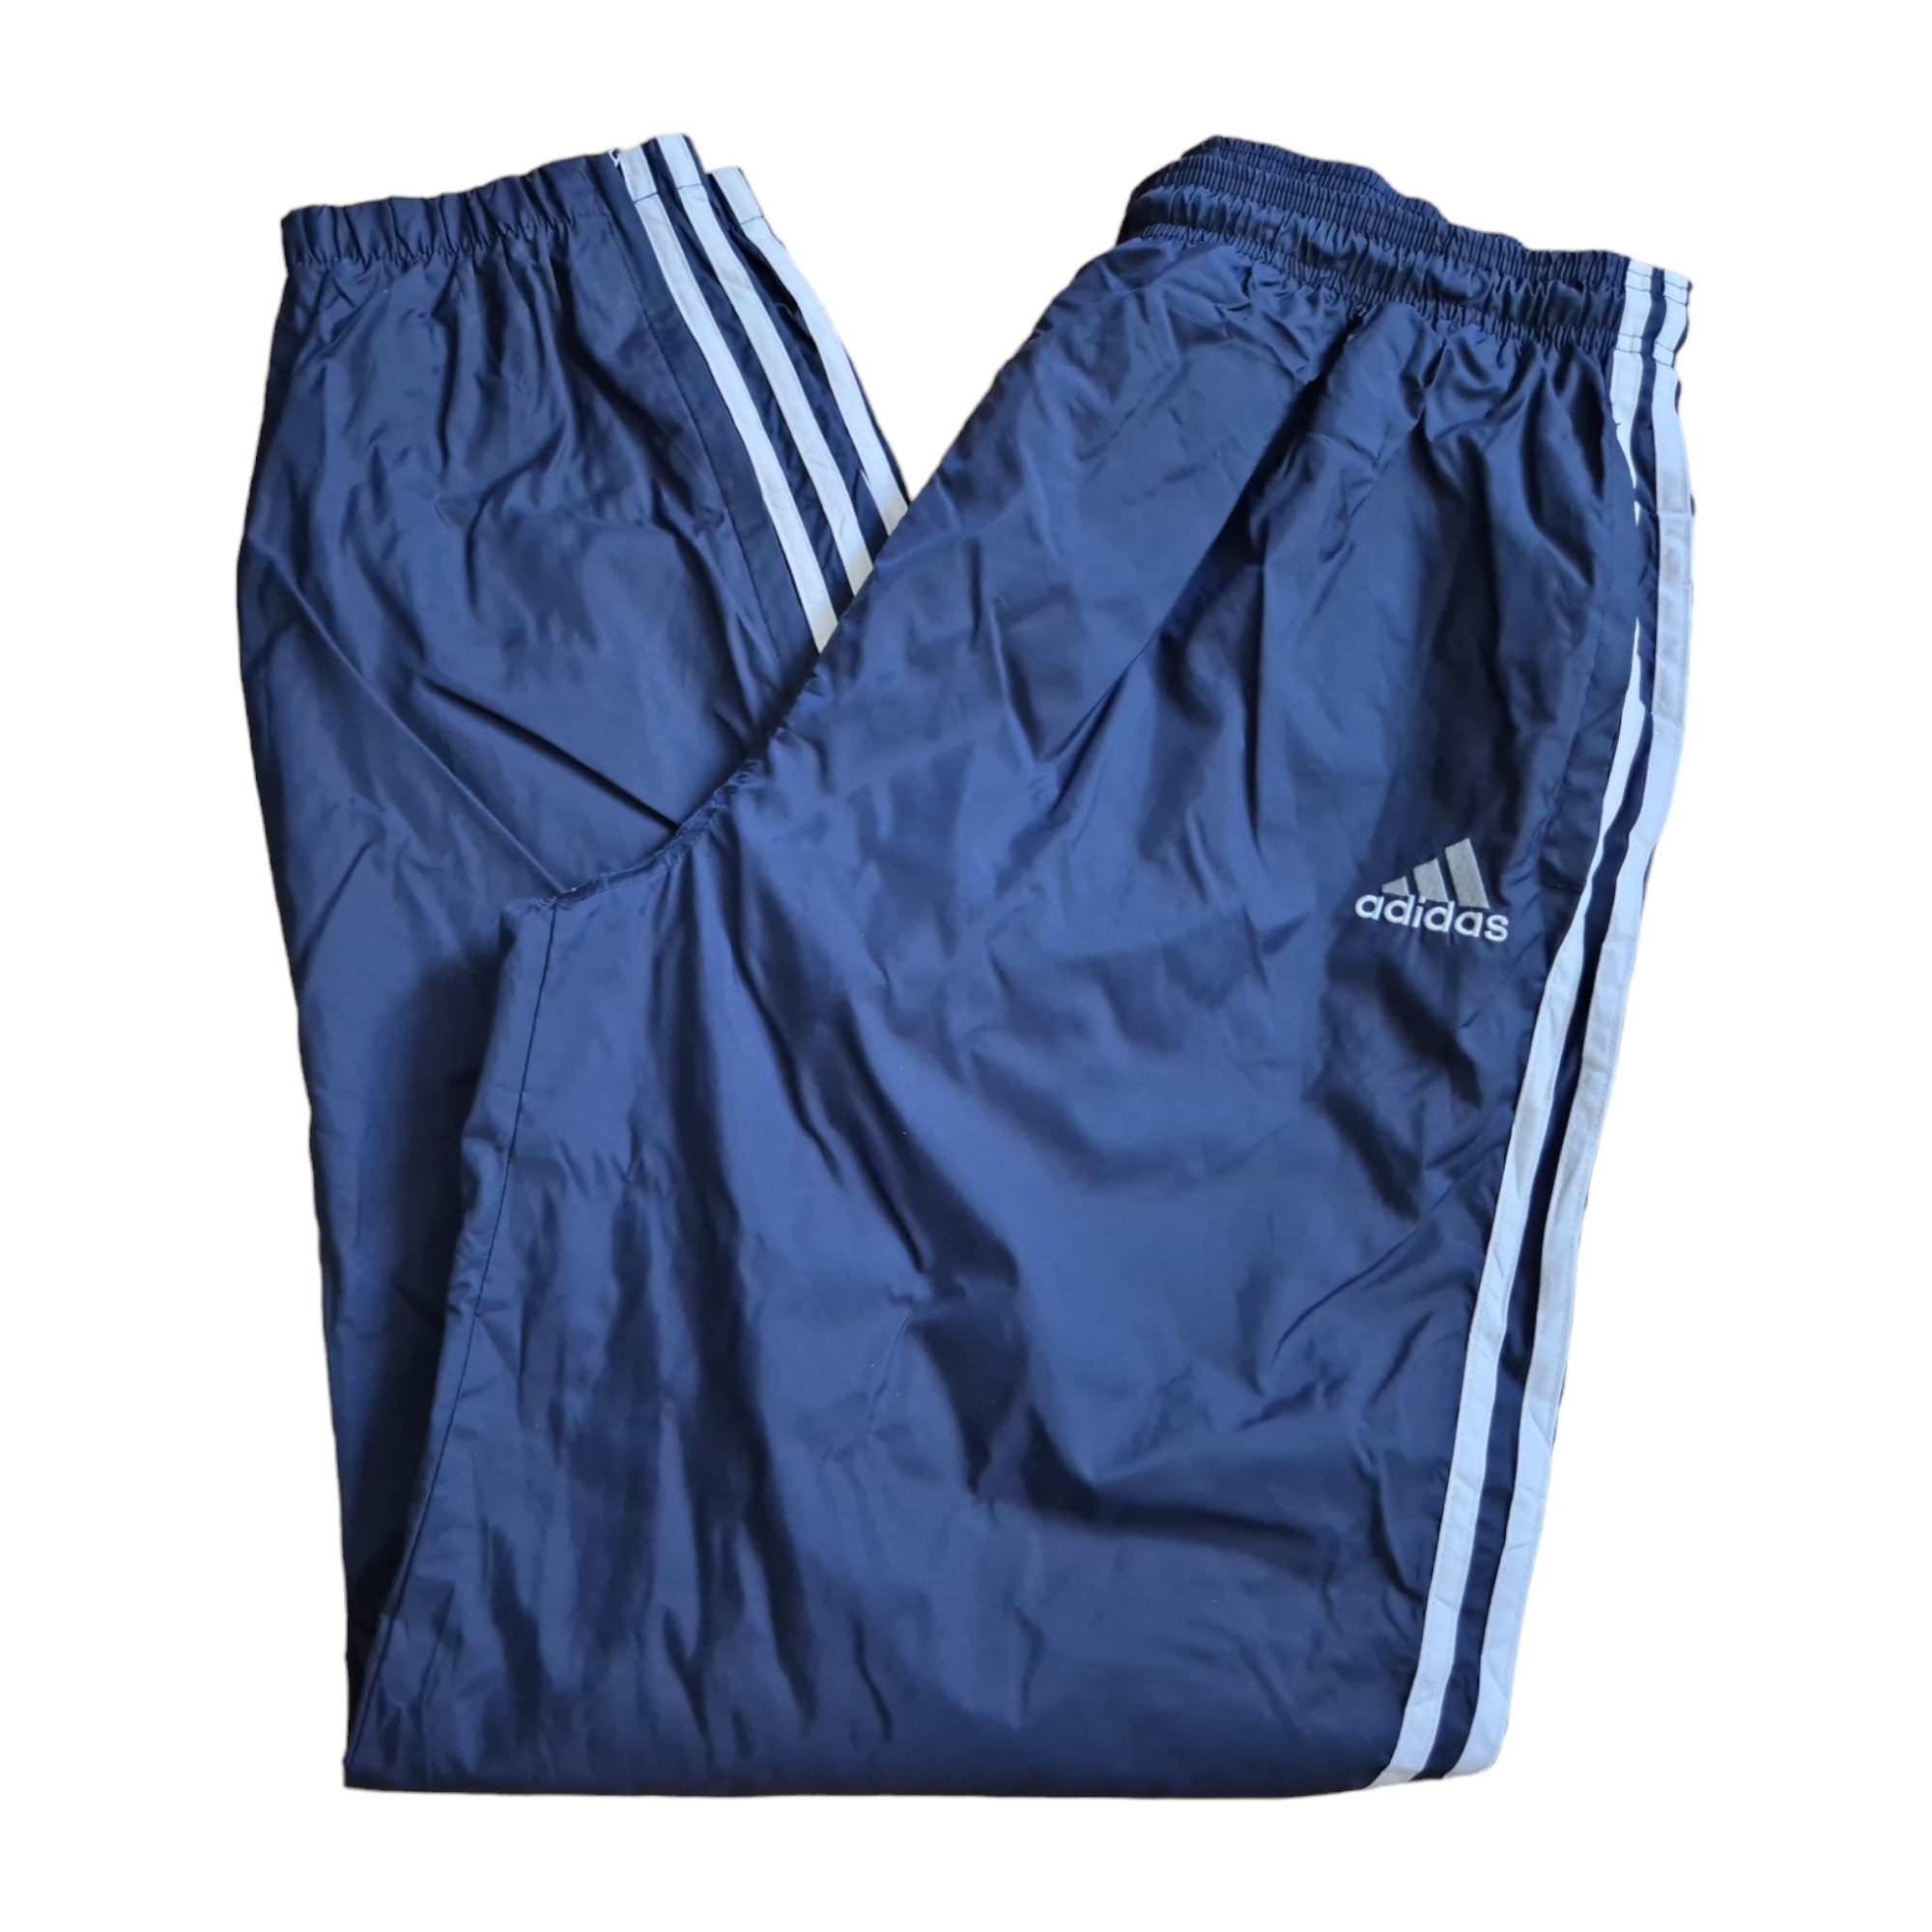 [XL] Vintage Adidas Trackpants